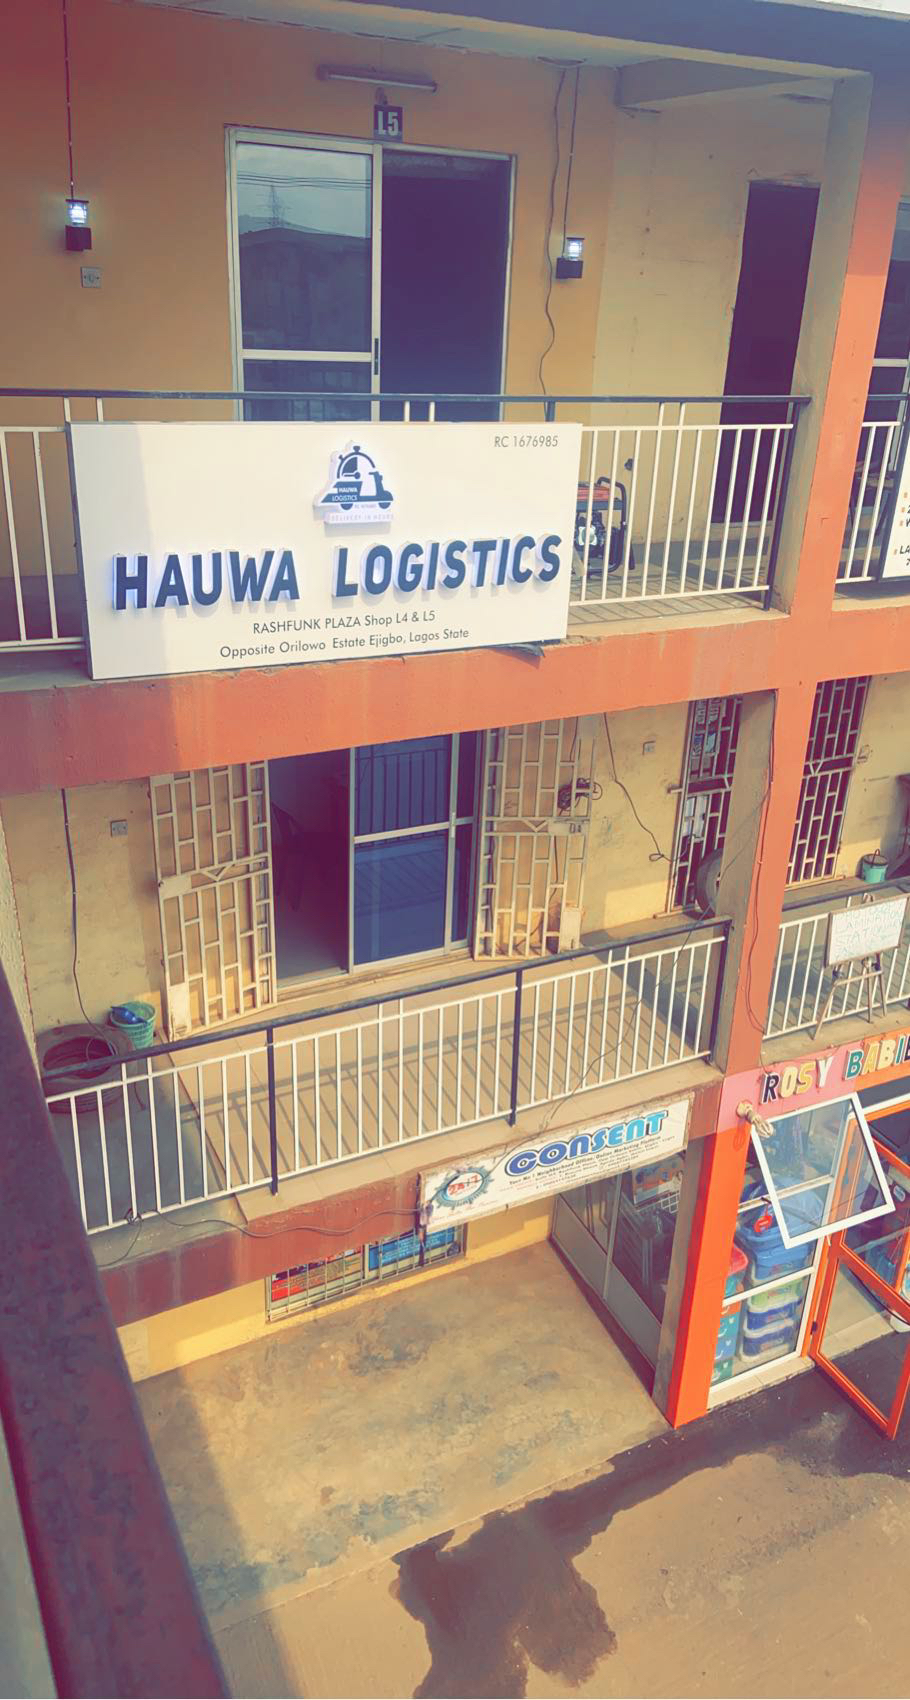 Hauwa logistics